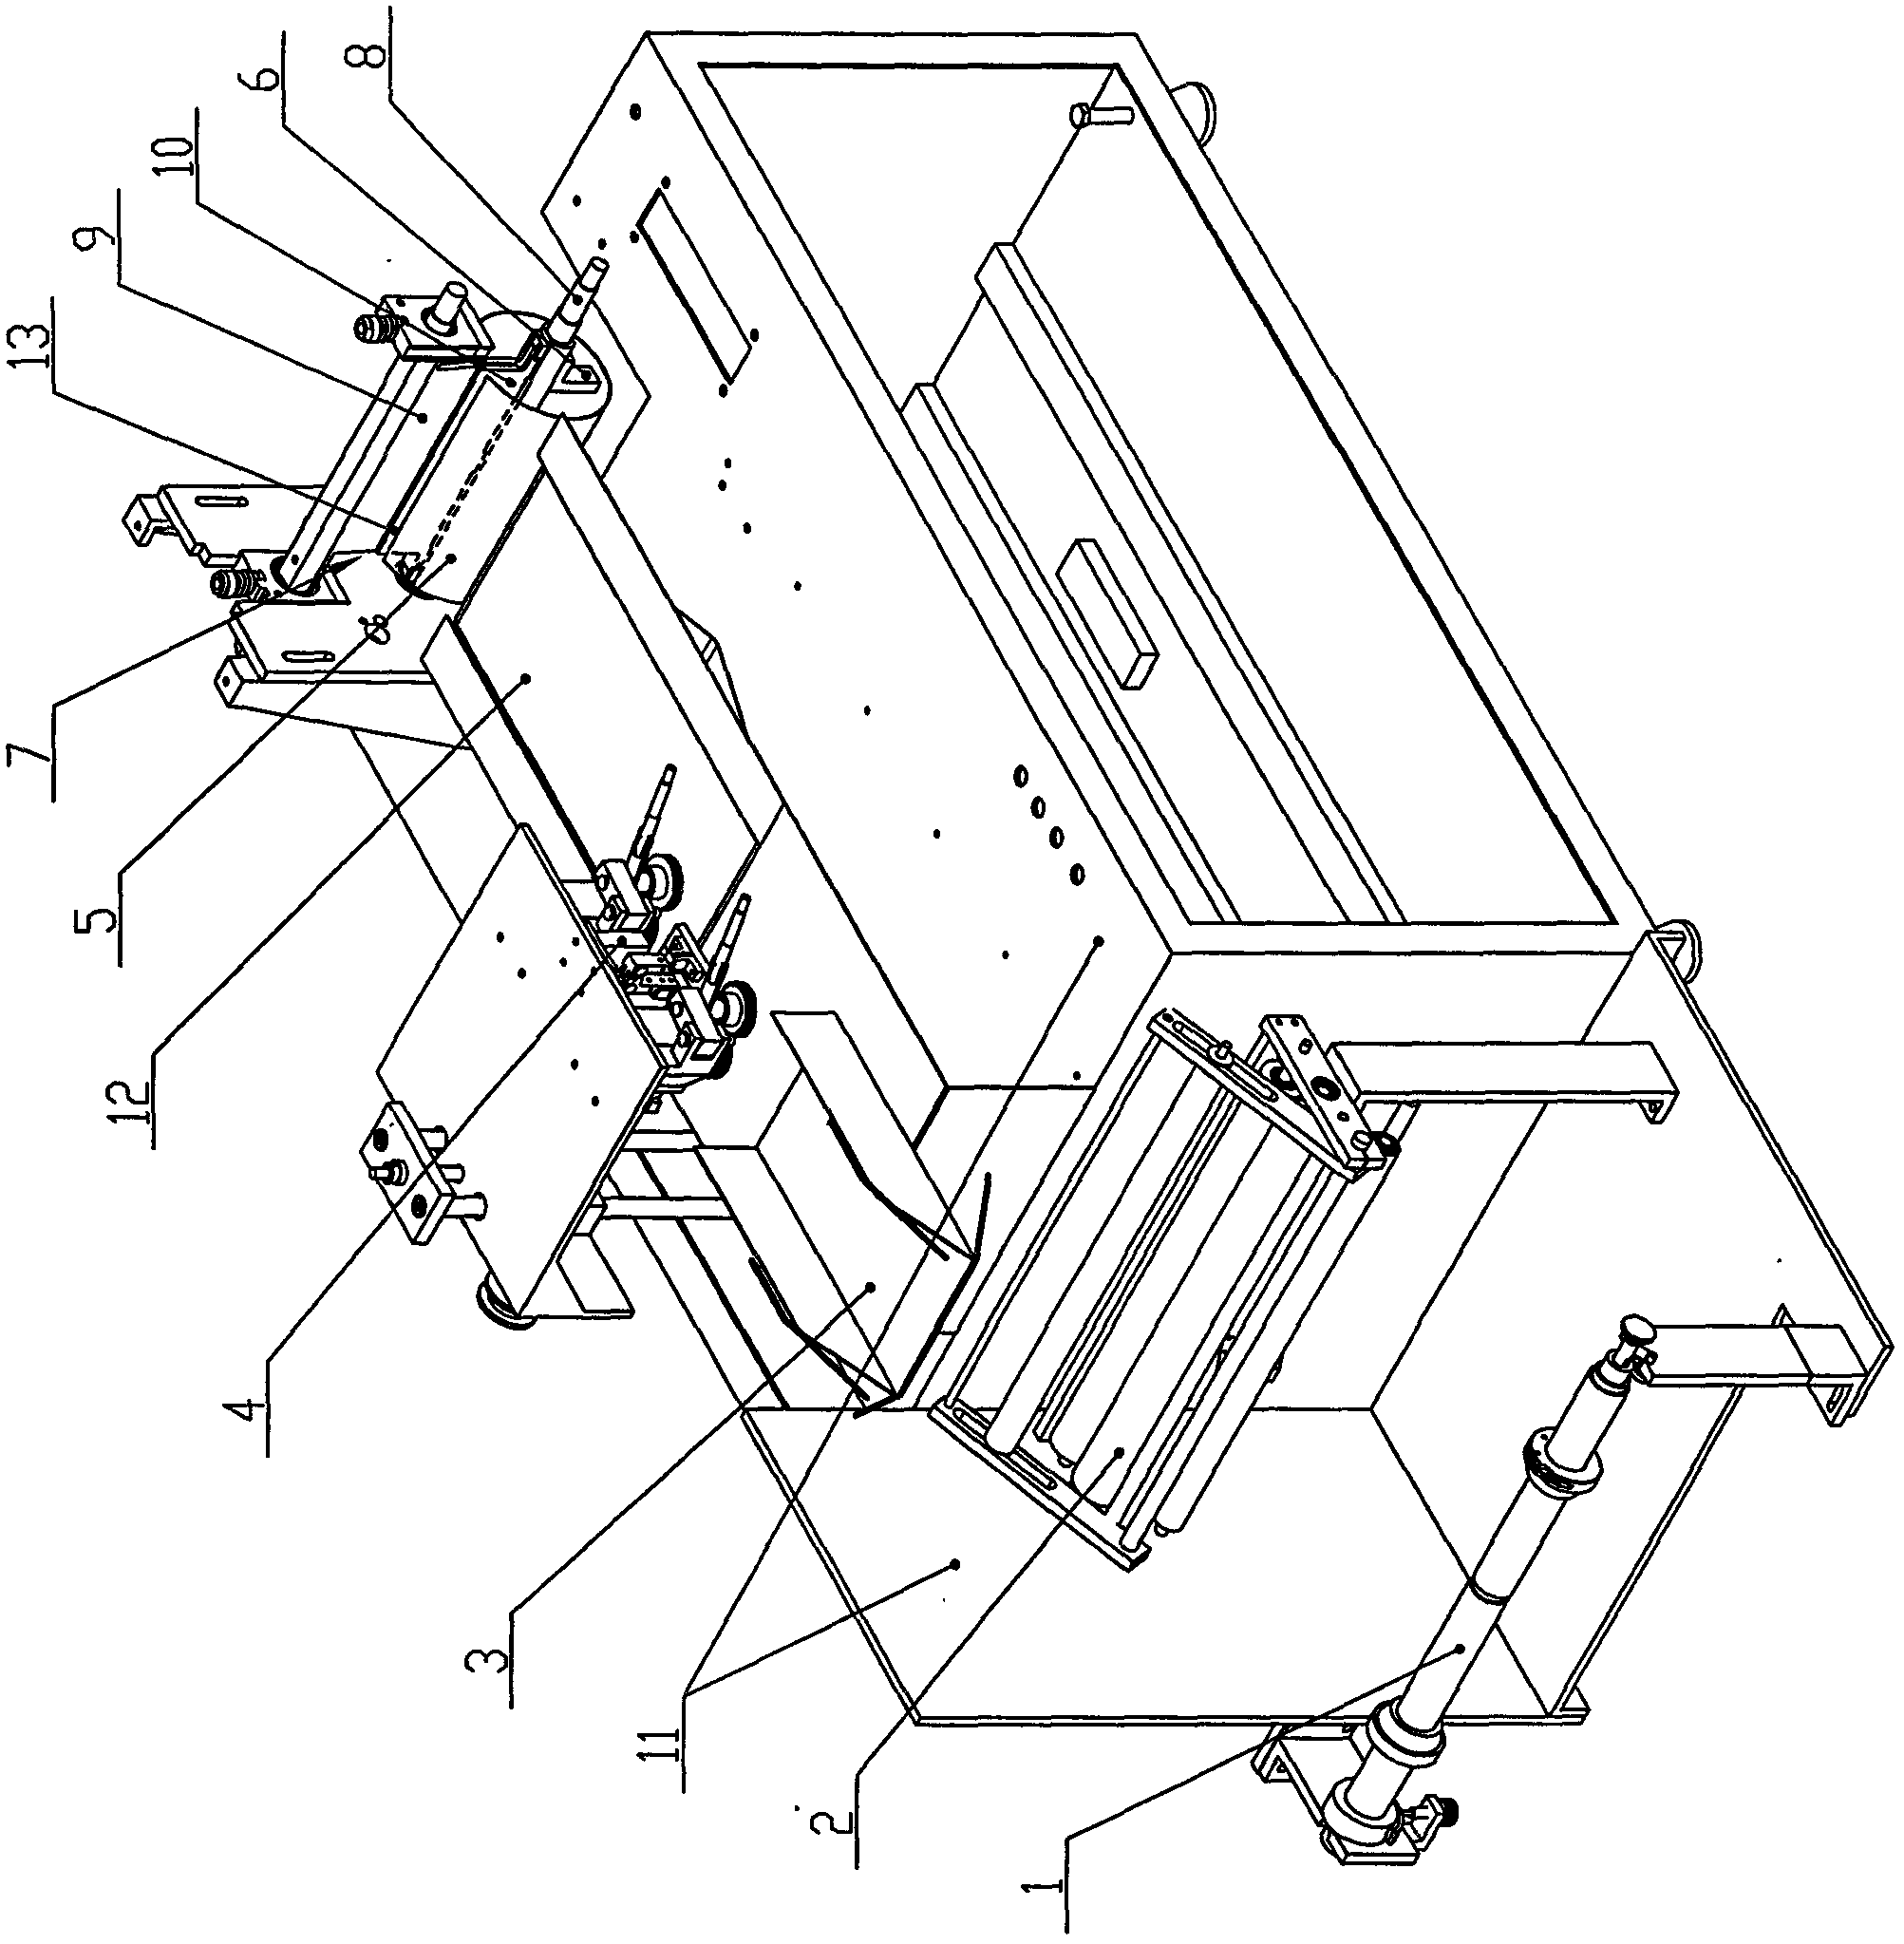 Lower-film-walking packing mechanism